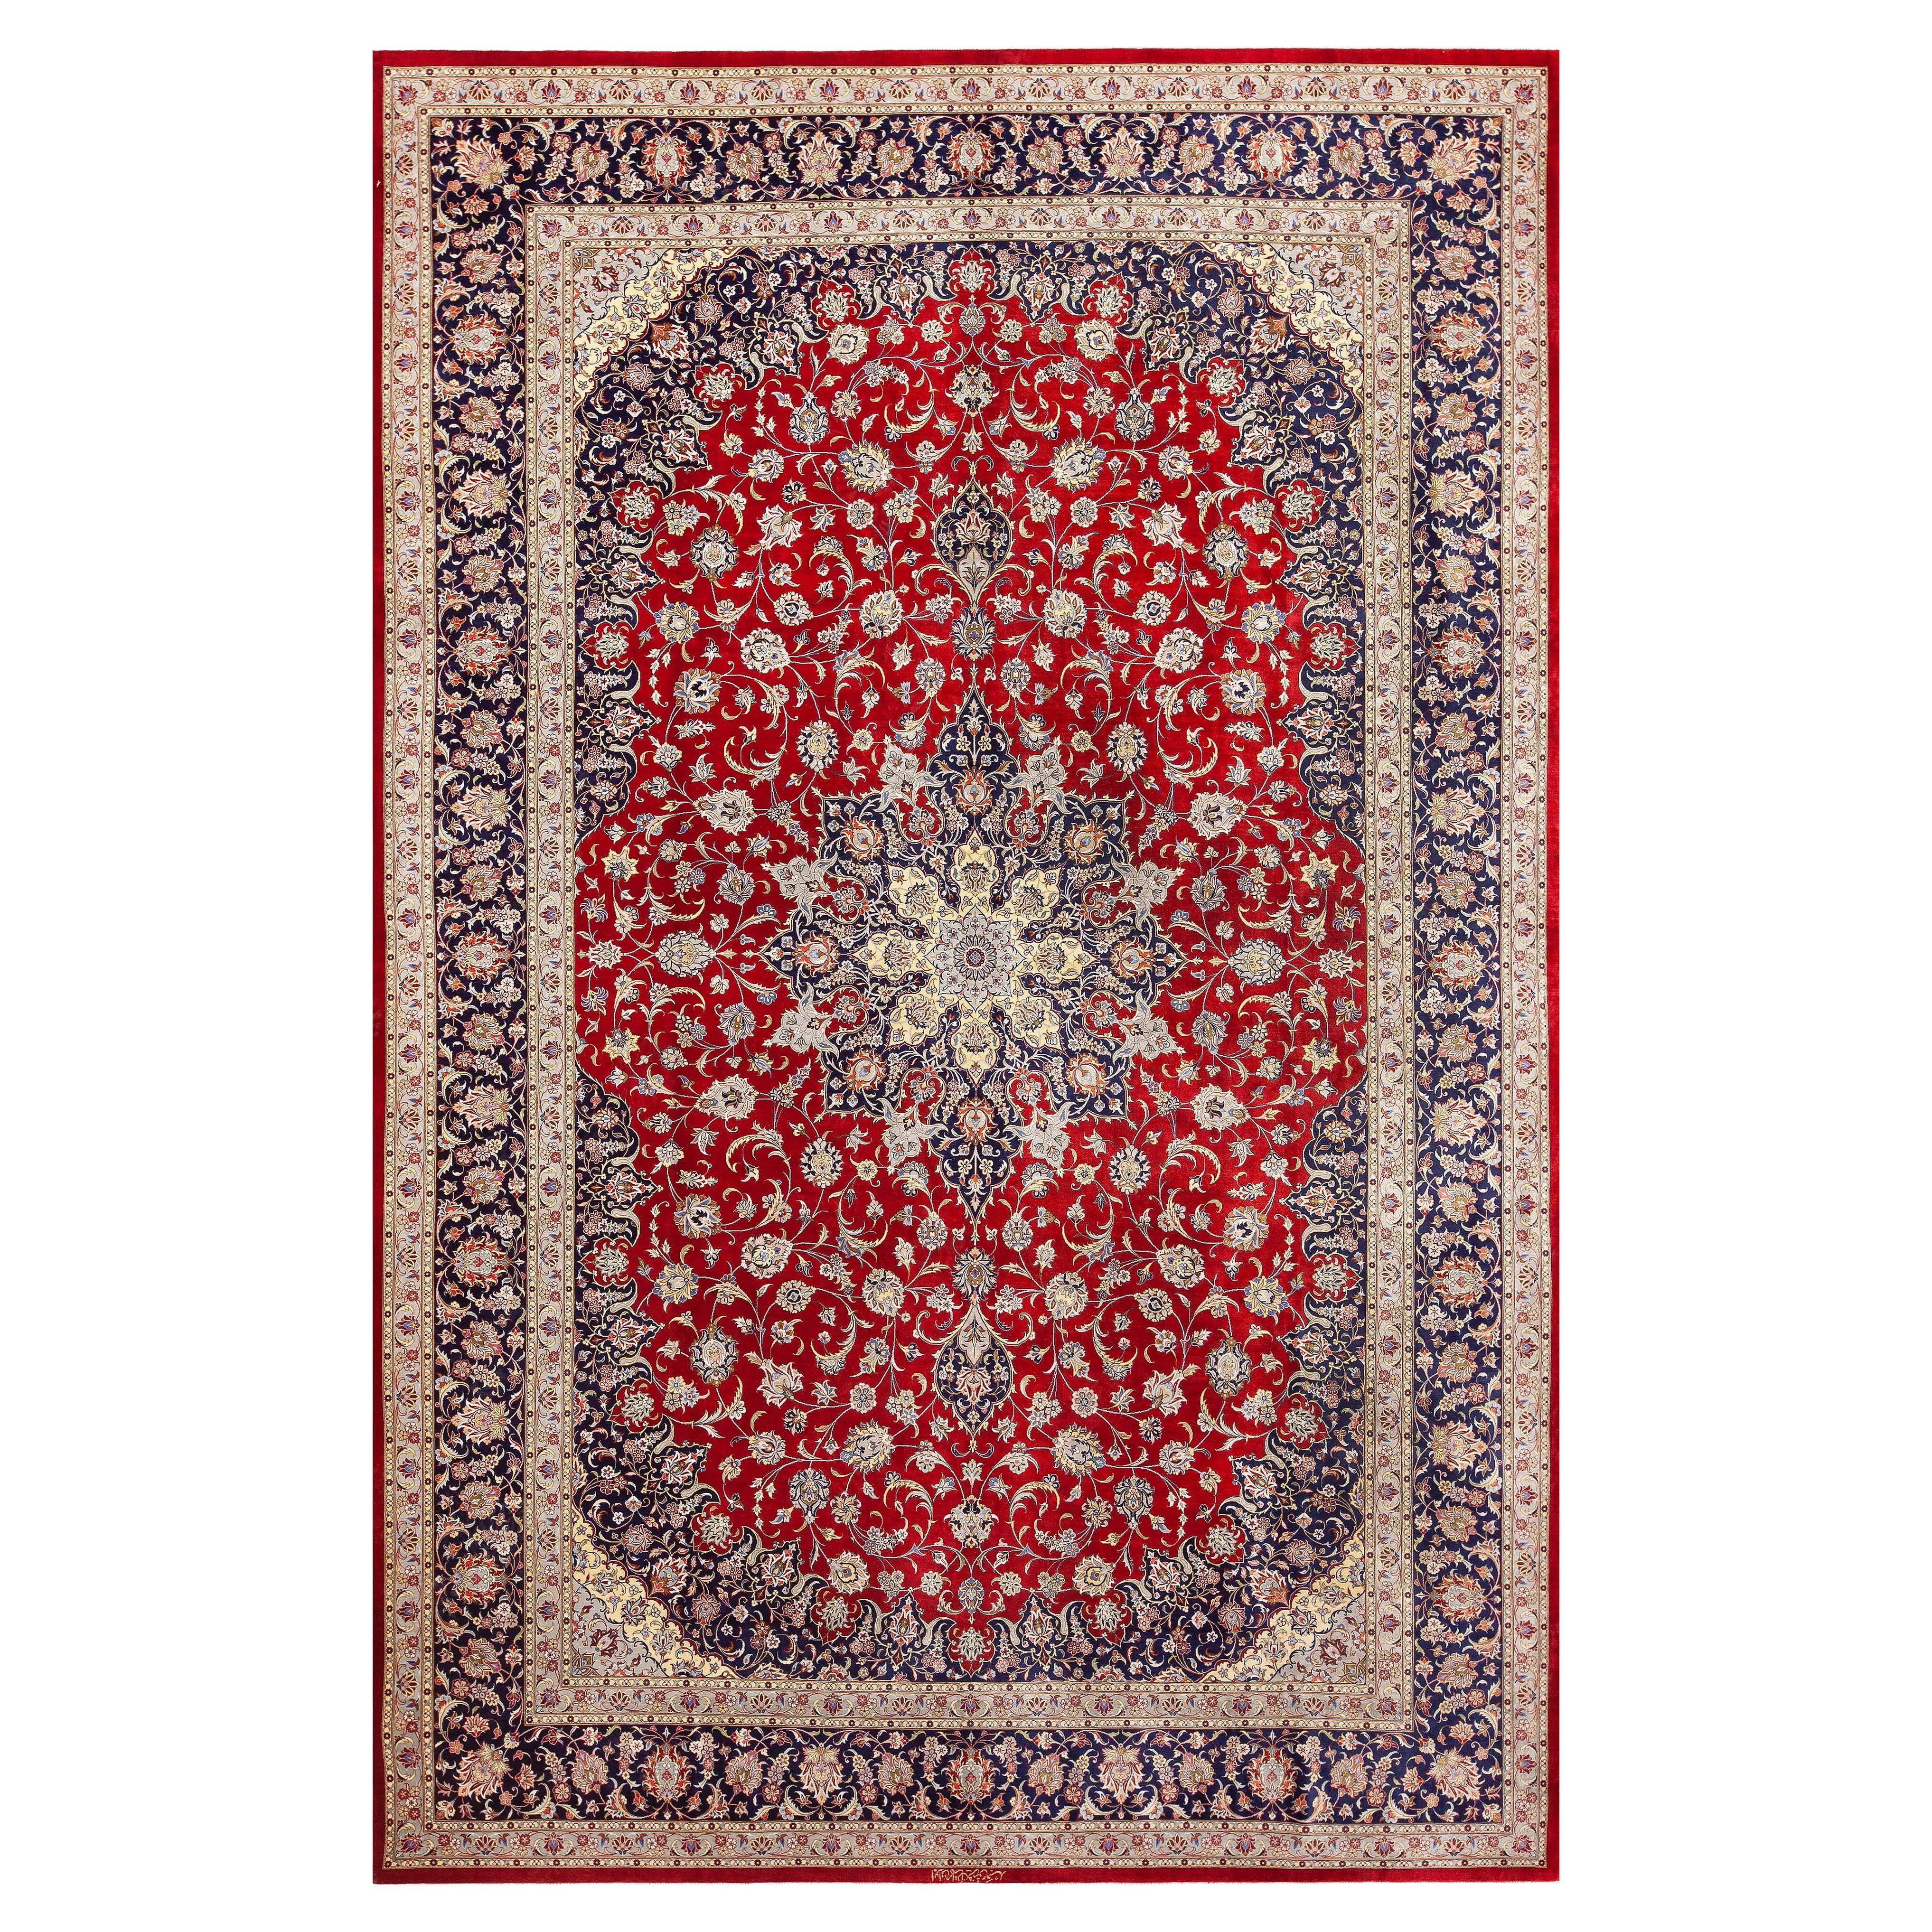 How do I identify a Kashan rug?